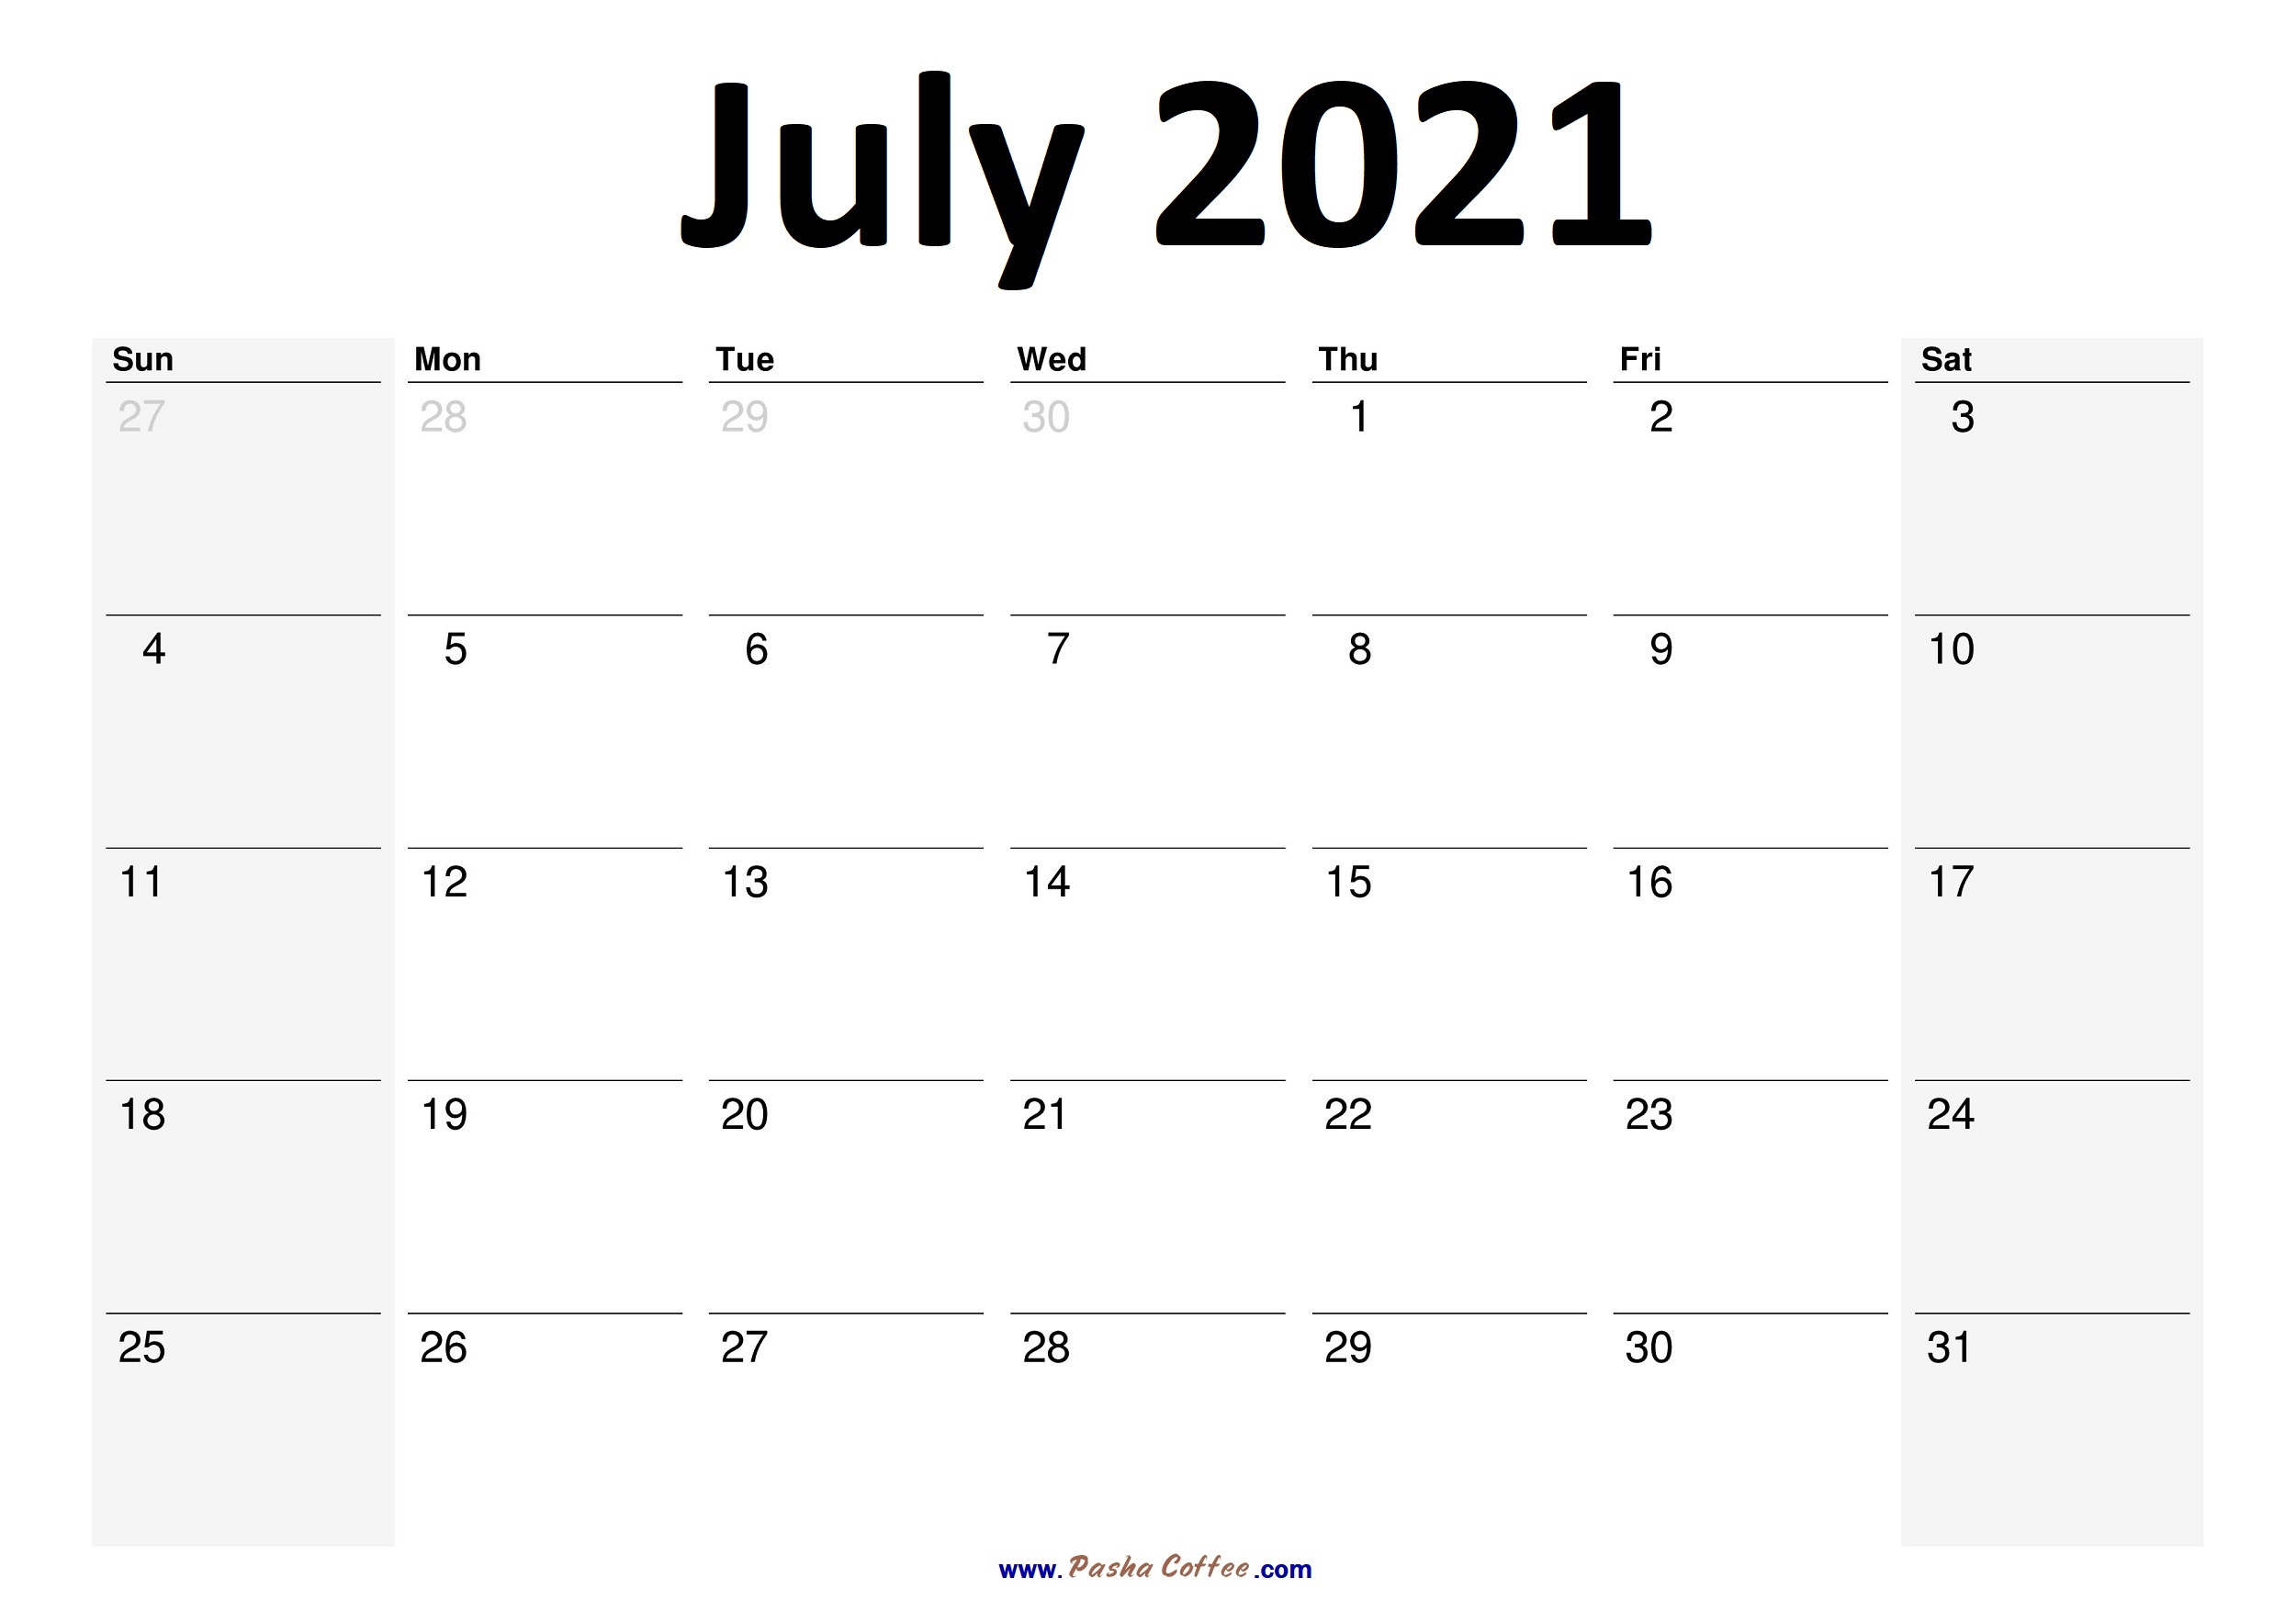 2021-July-Calendar-Planner01